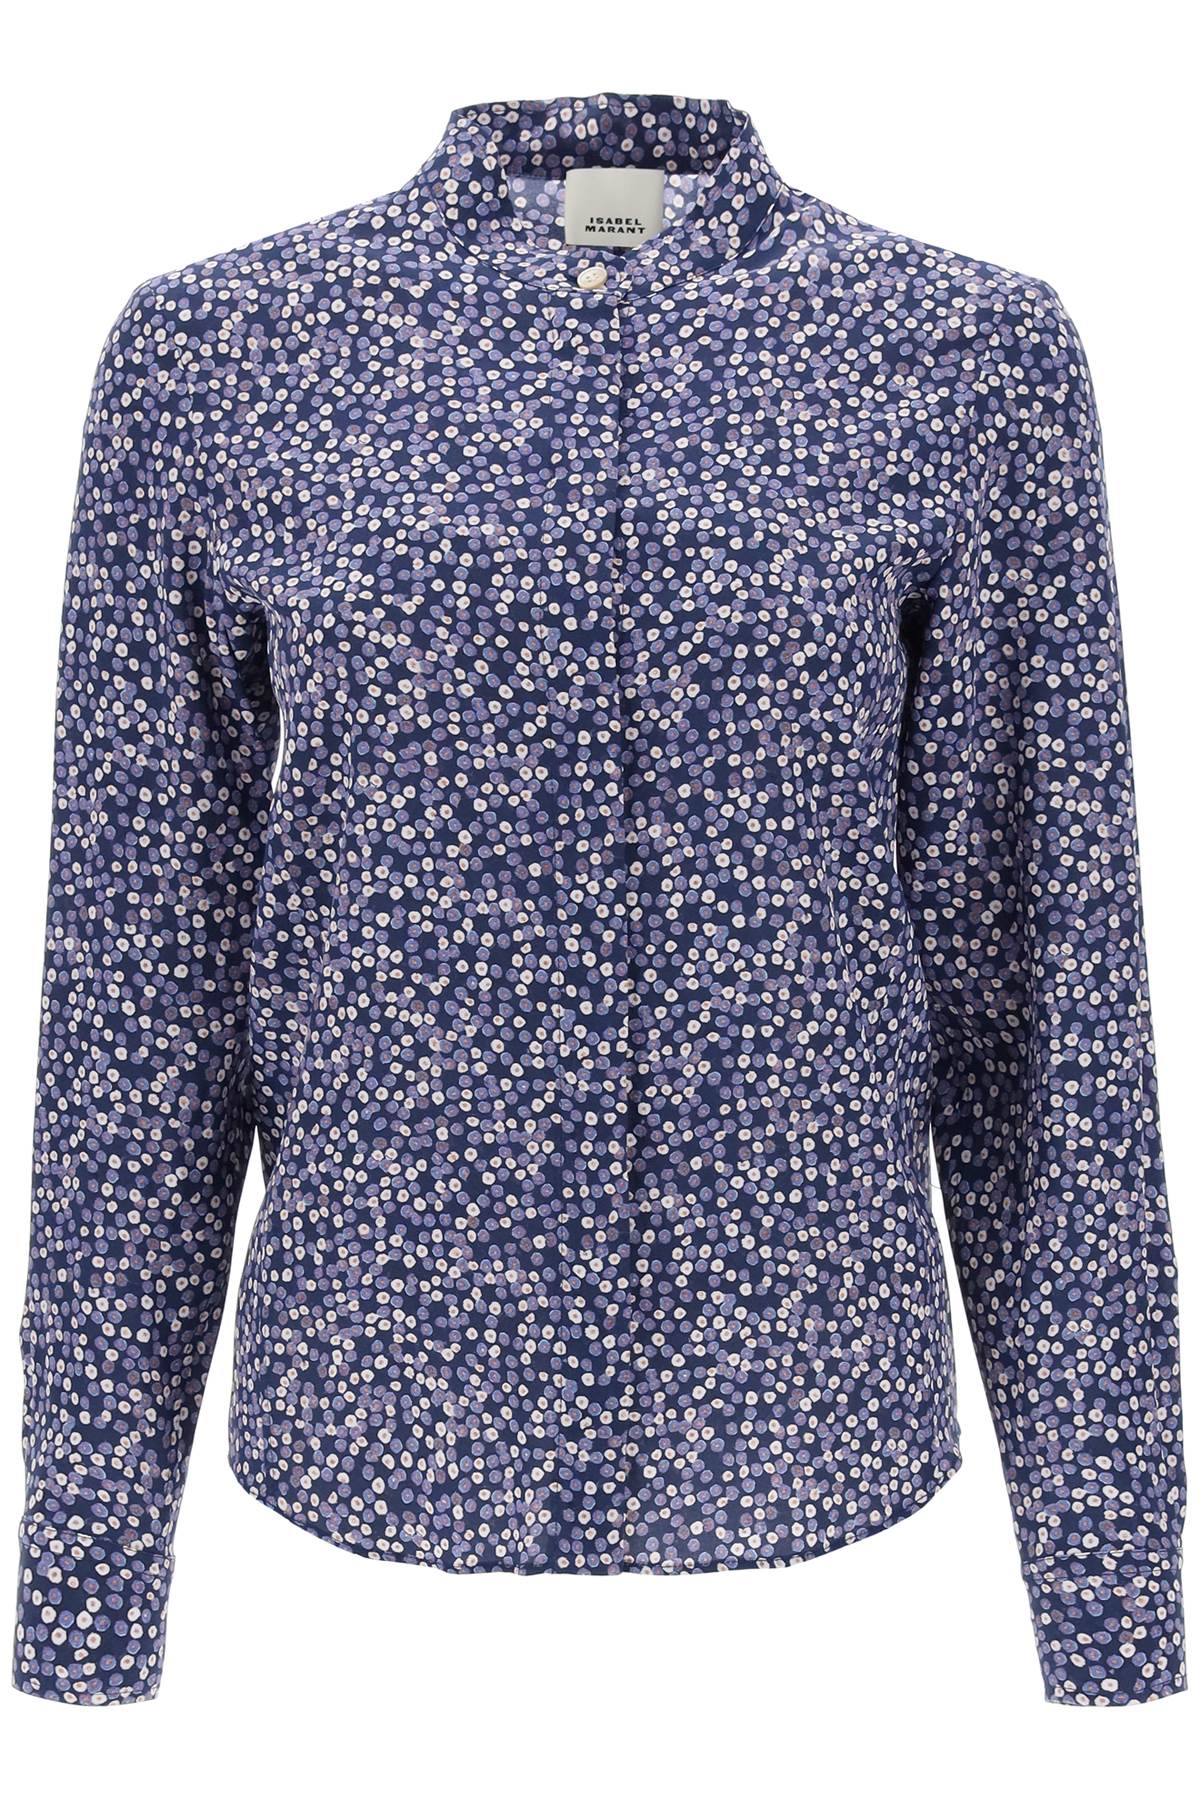 Isabel marant ilda silk shirt with floral print-0